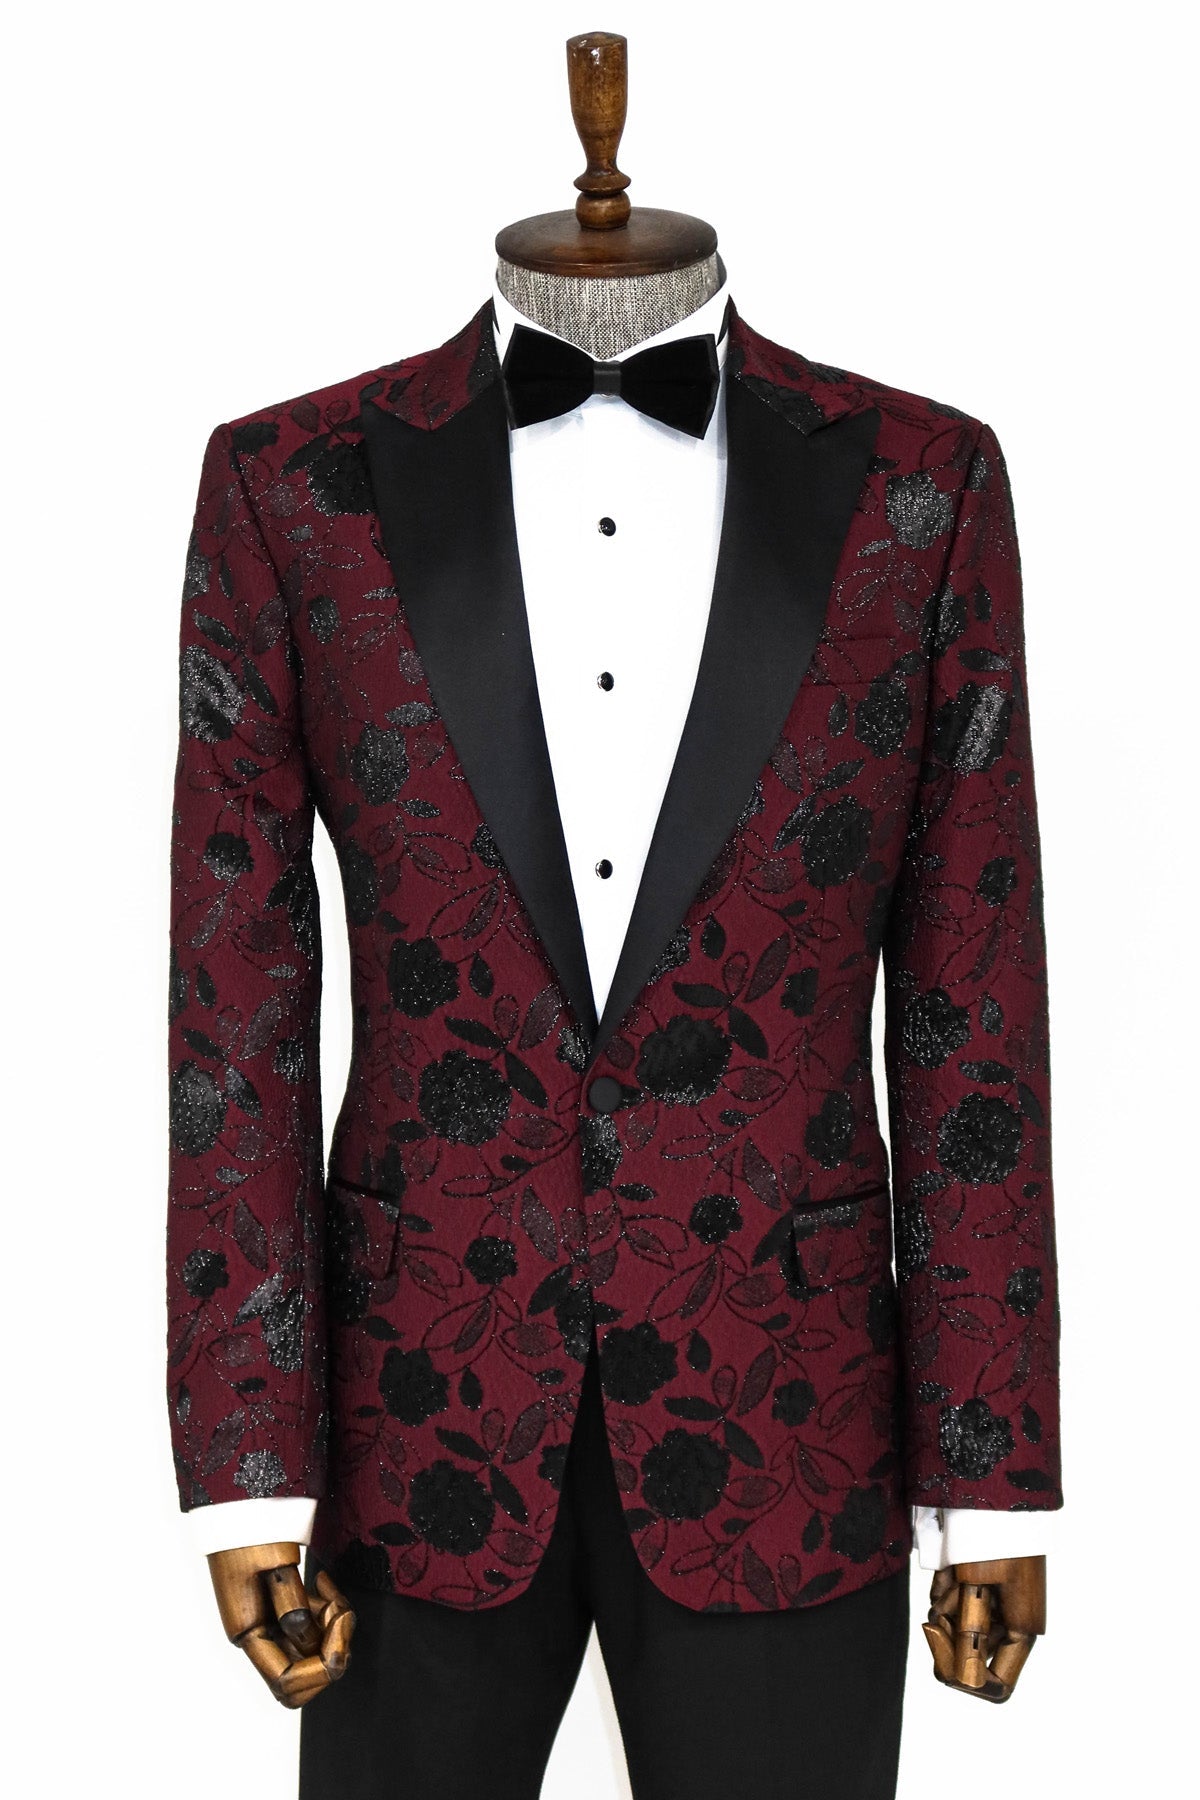 Shop Men's Burgundy Blazer with Black Floral Design | KCT Menswear ...